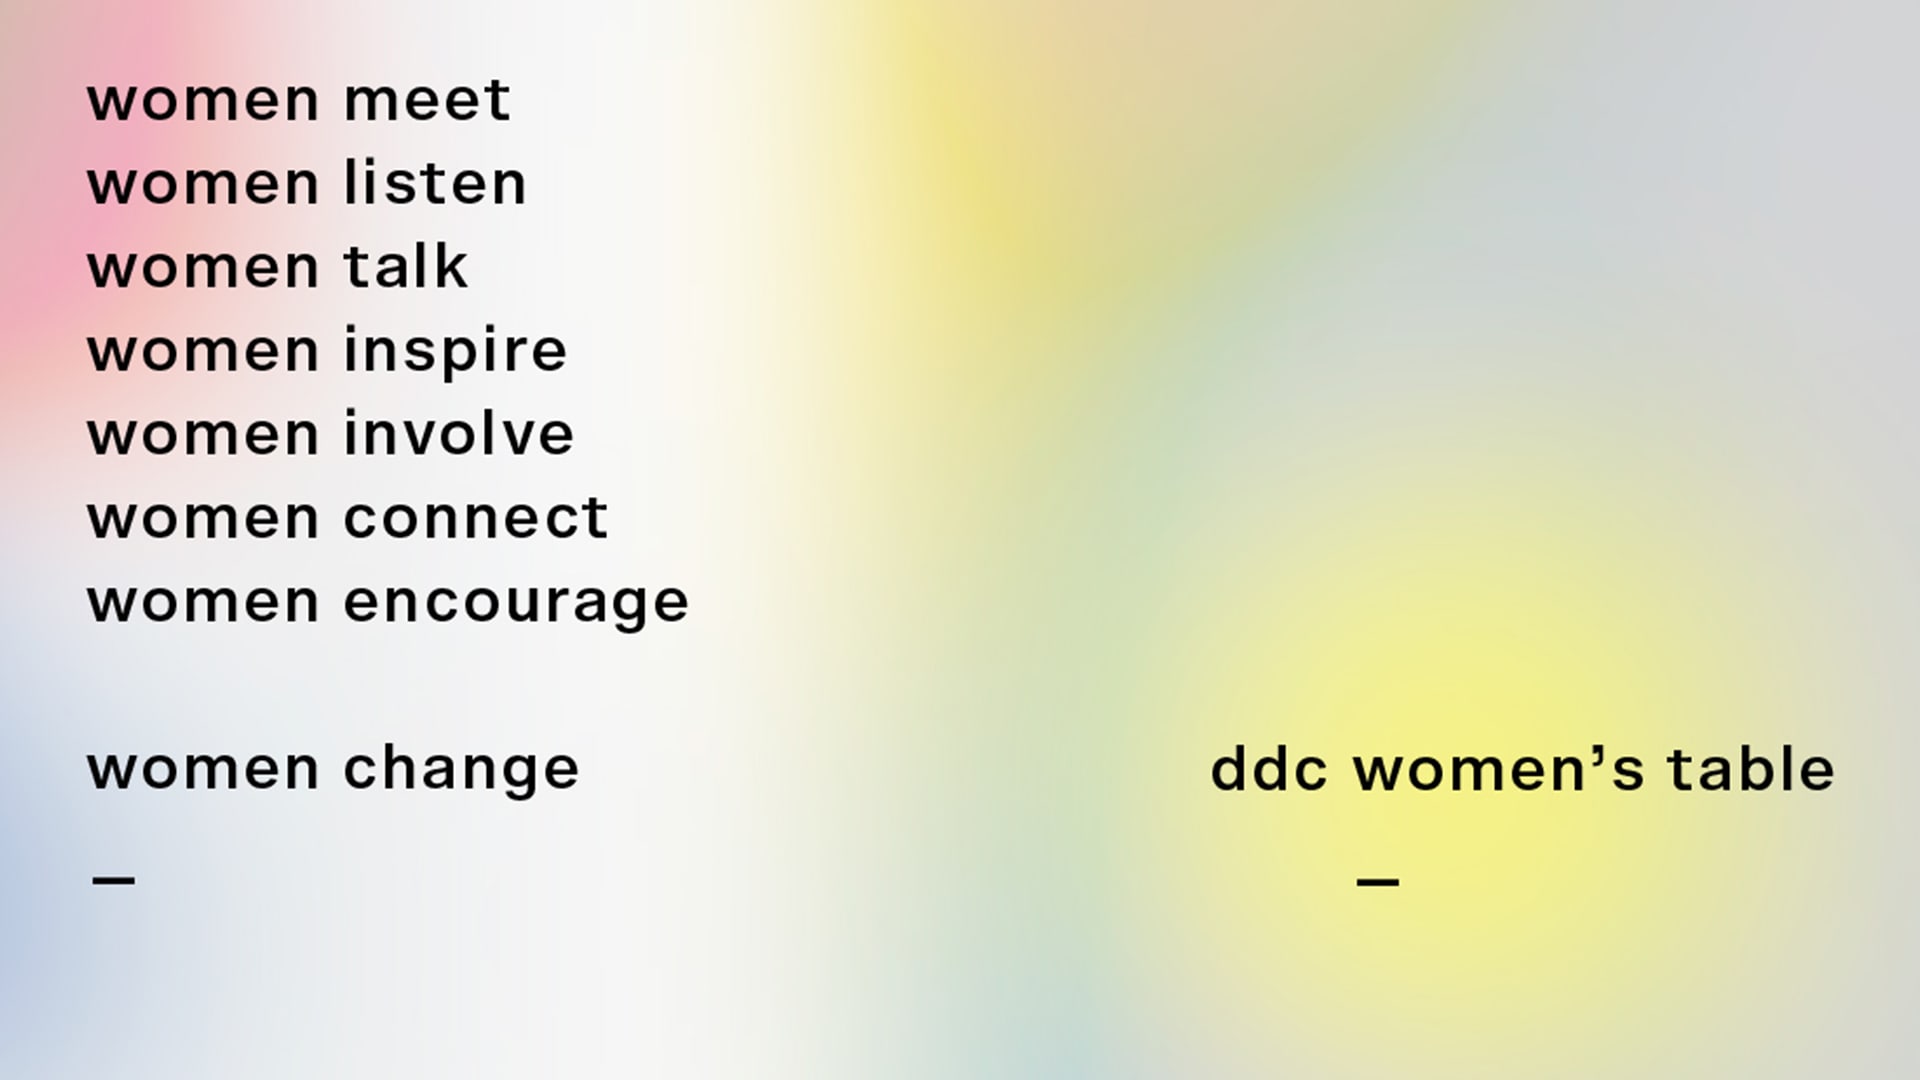 DDC Womens Table